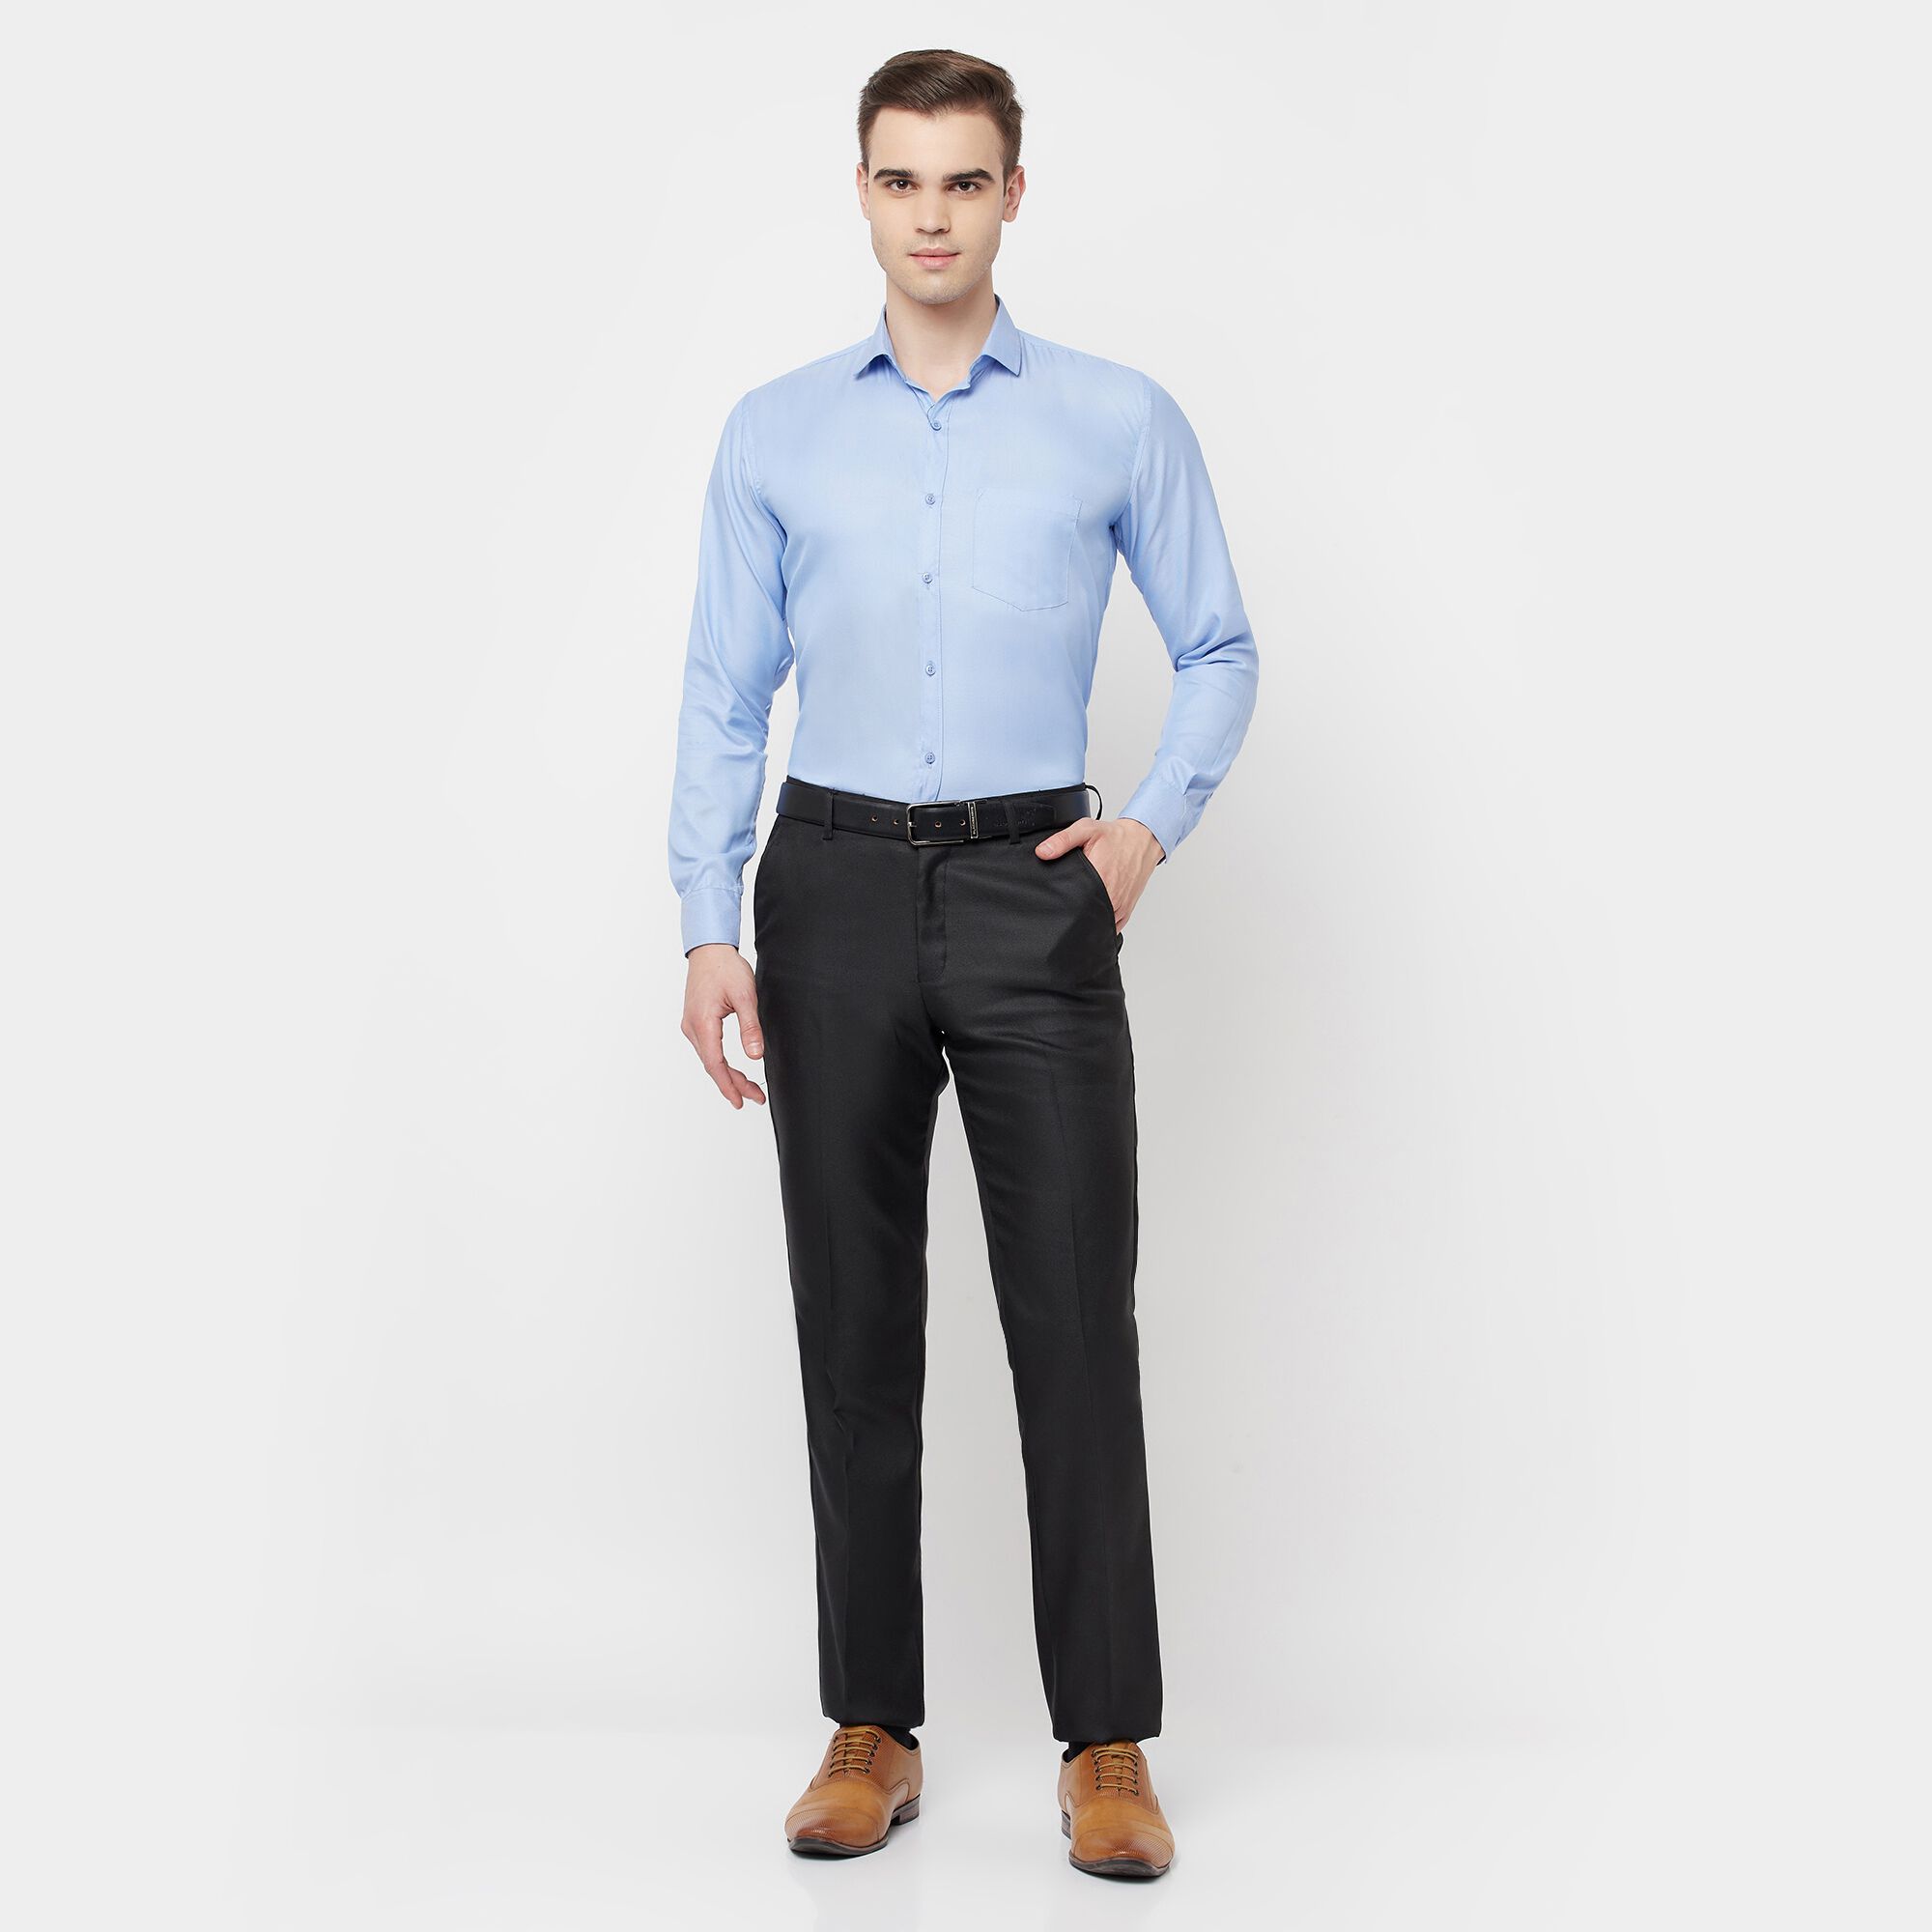 Casual Men's Striped Business Pants Slim Fit Straight Leg Formal Dress  Trousers | eBay